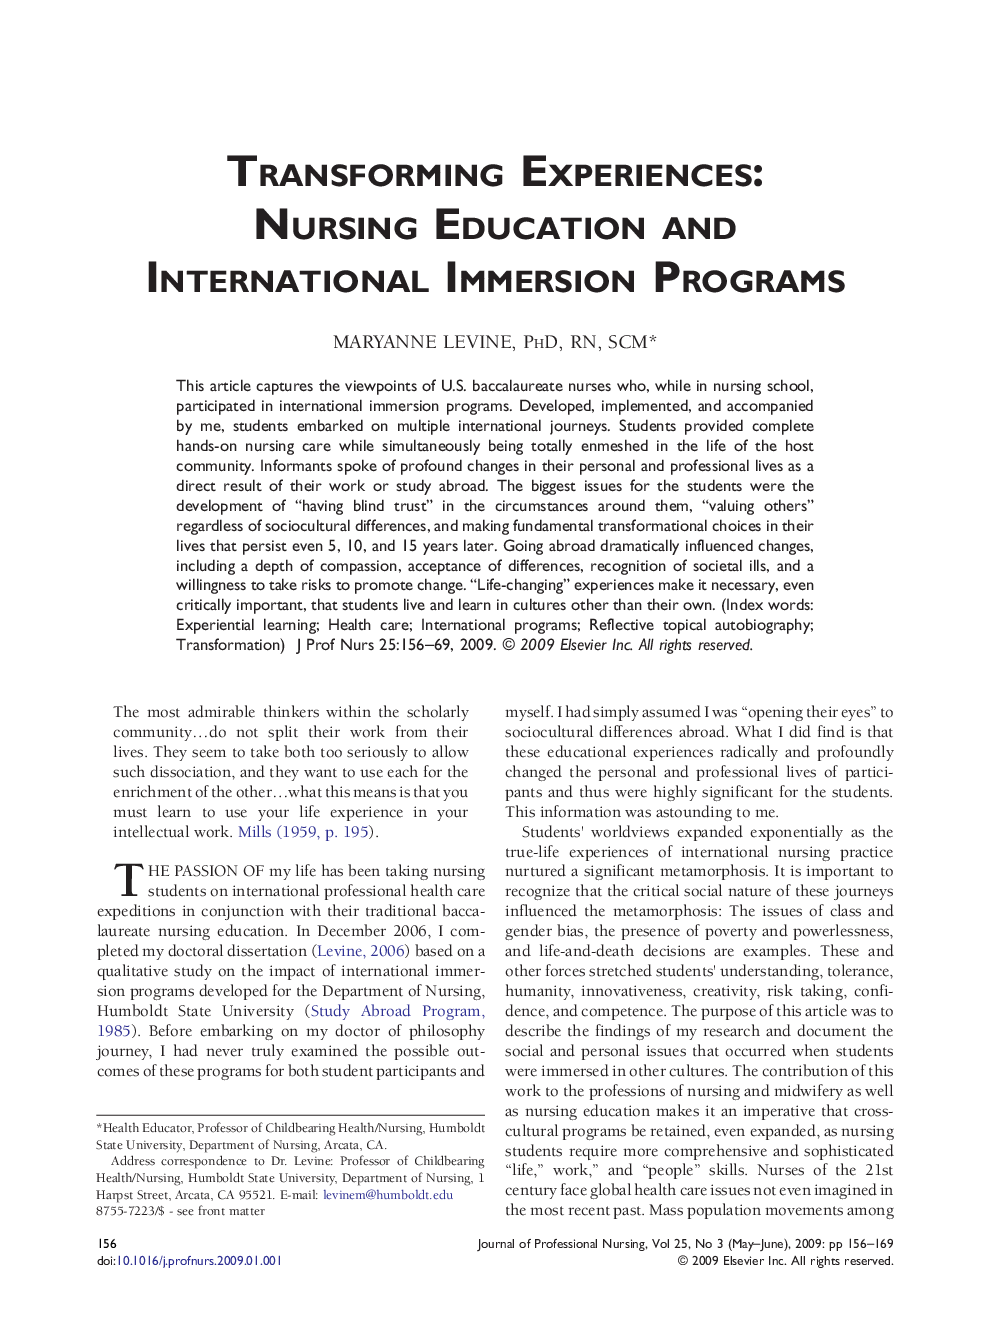 Transforming Experiences: Nursing Education and International Immersion Programs